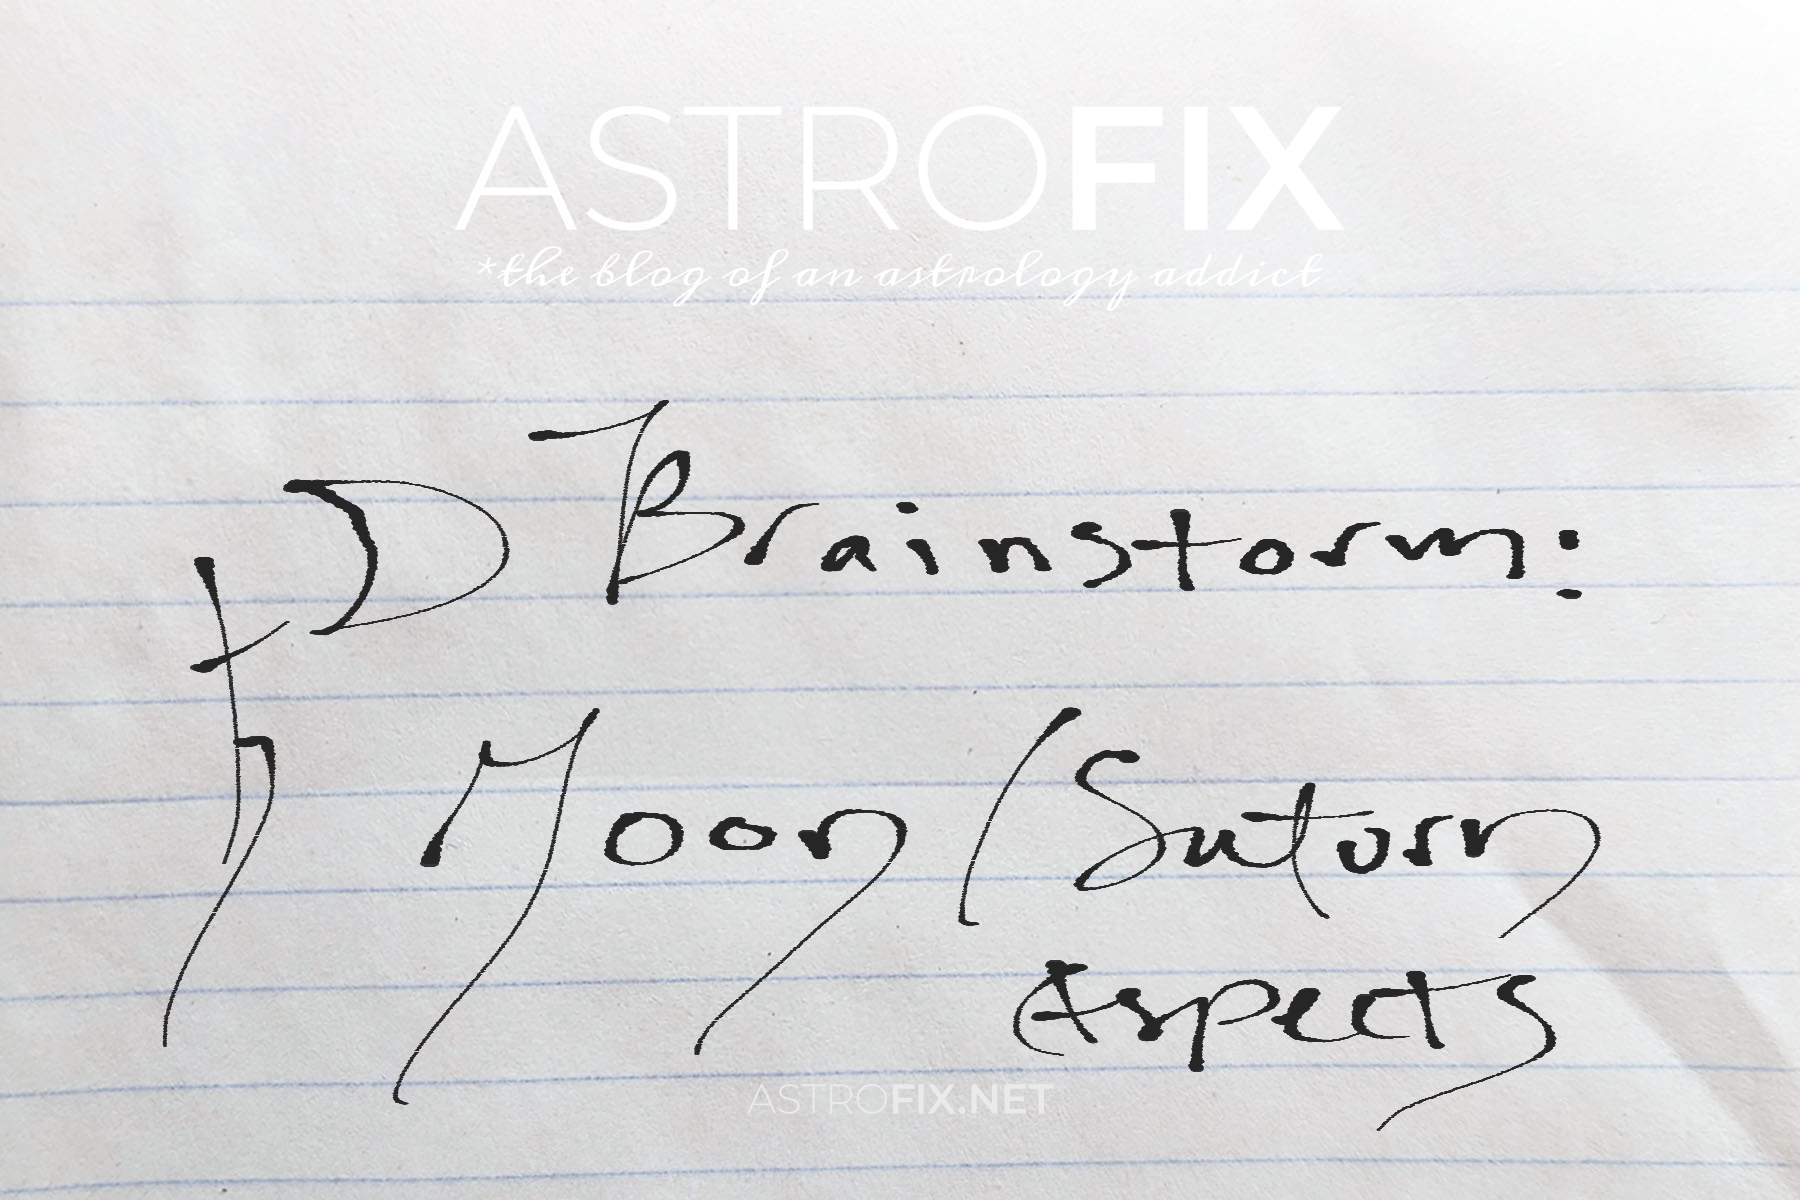 brainstorm-moon-saturn-astrology-aspects